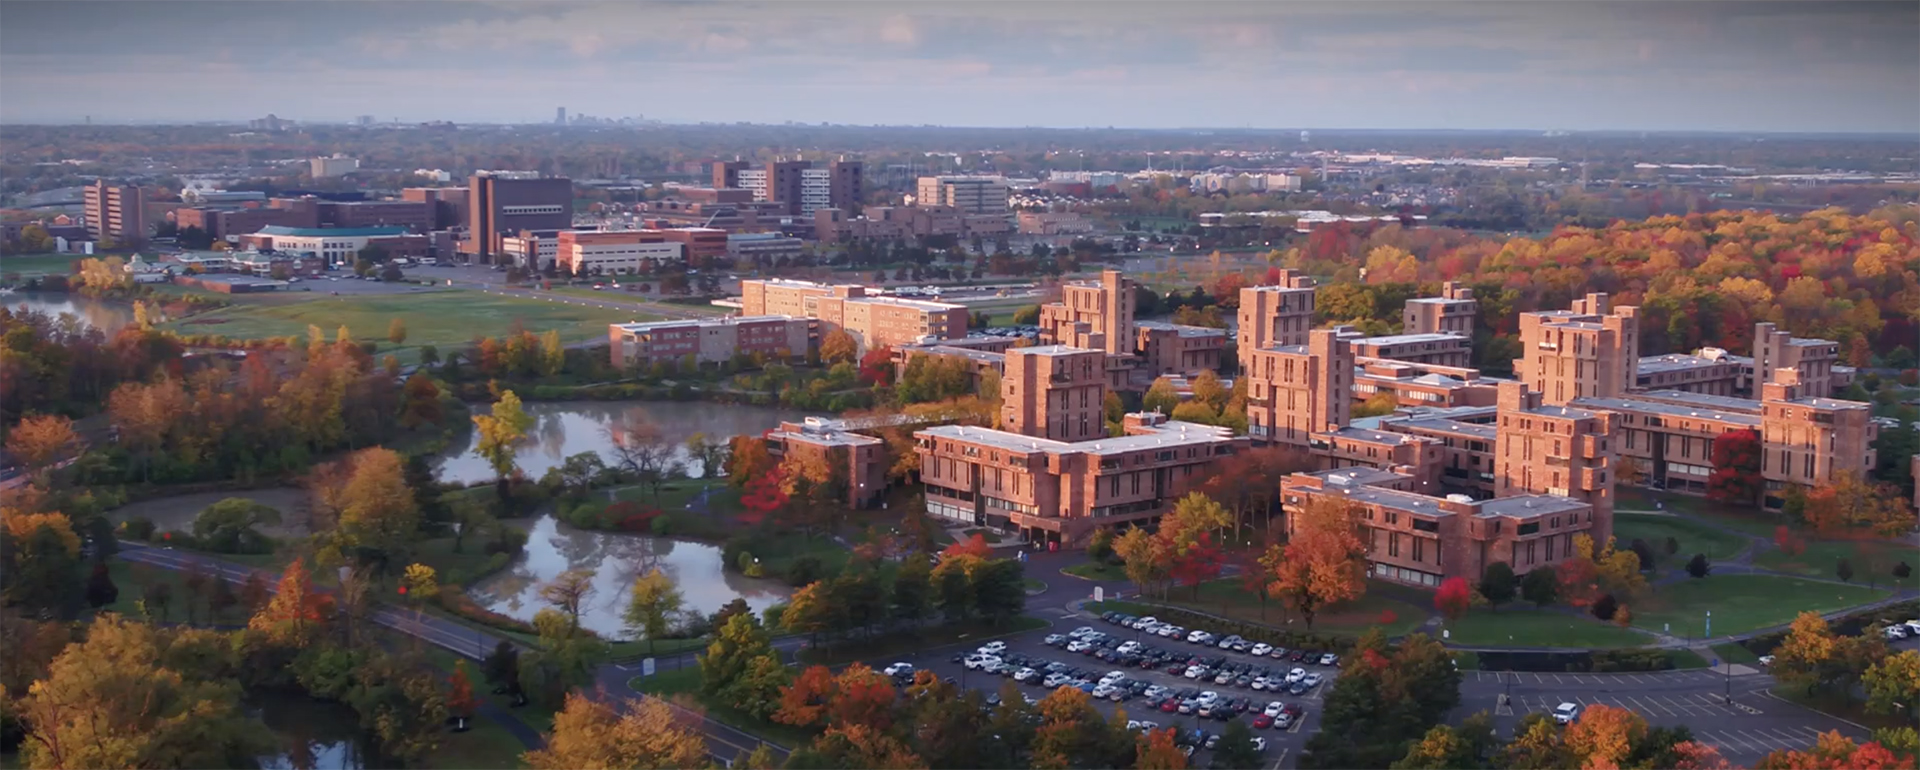 Welcome to University at - University at Buffalo